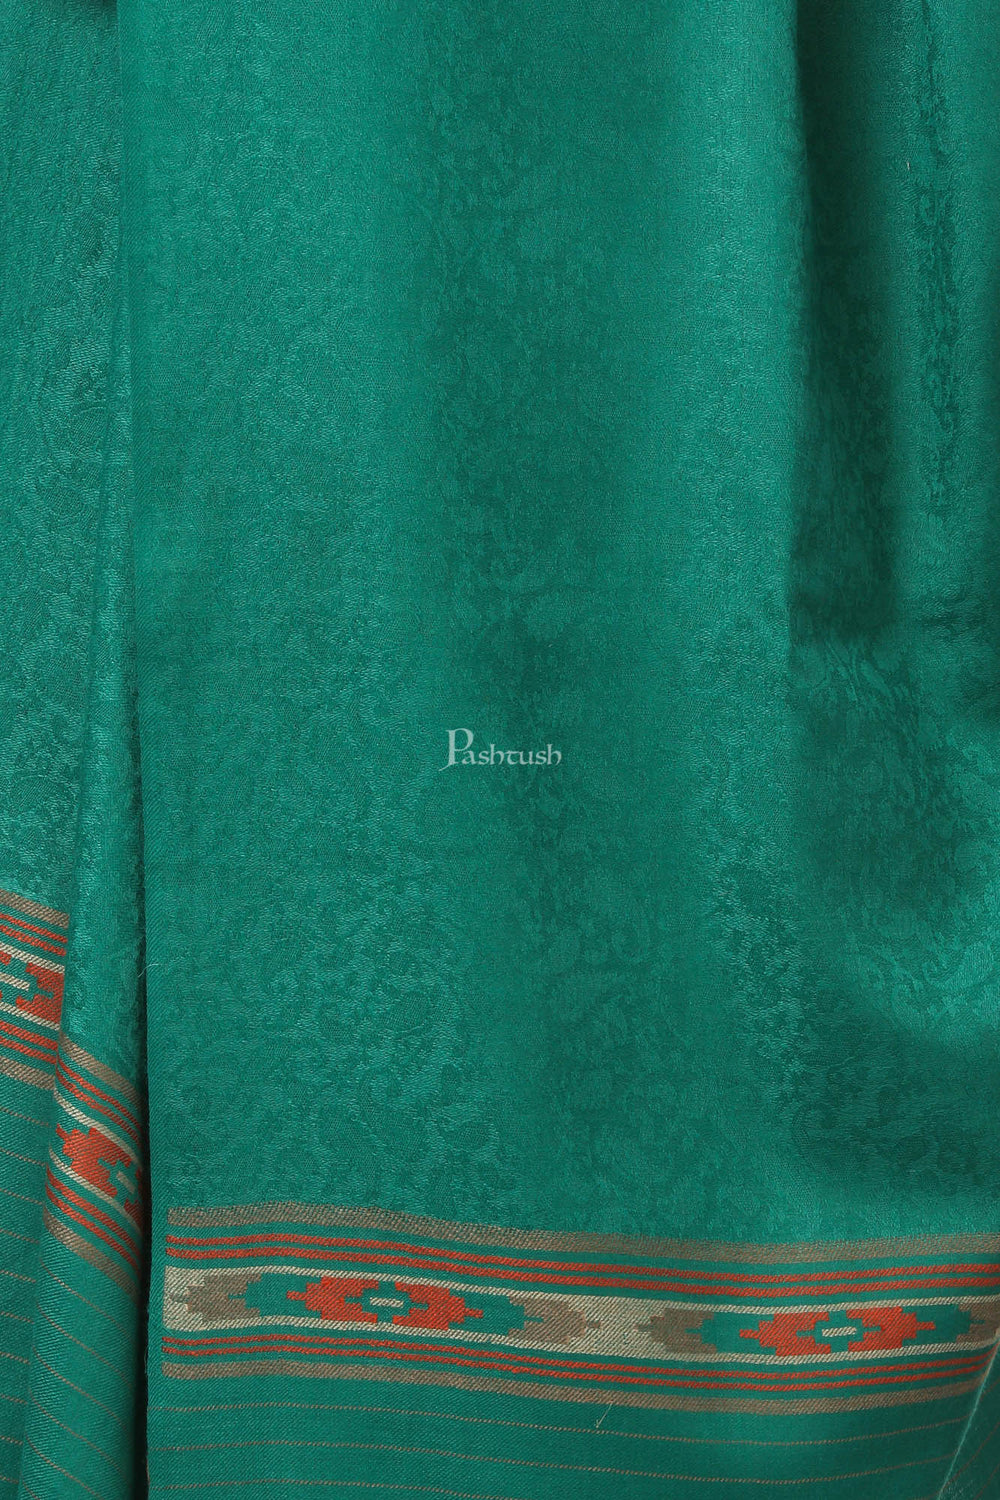 Pashtush India Womens Shawls Pashtush Women'S Fine Wool Shawl, Soft And Warm, Aztec Design, Jacquard Weave - Bottle Green